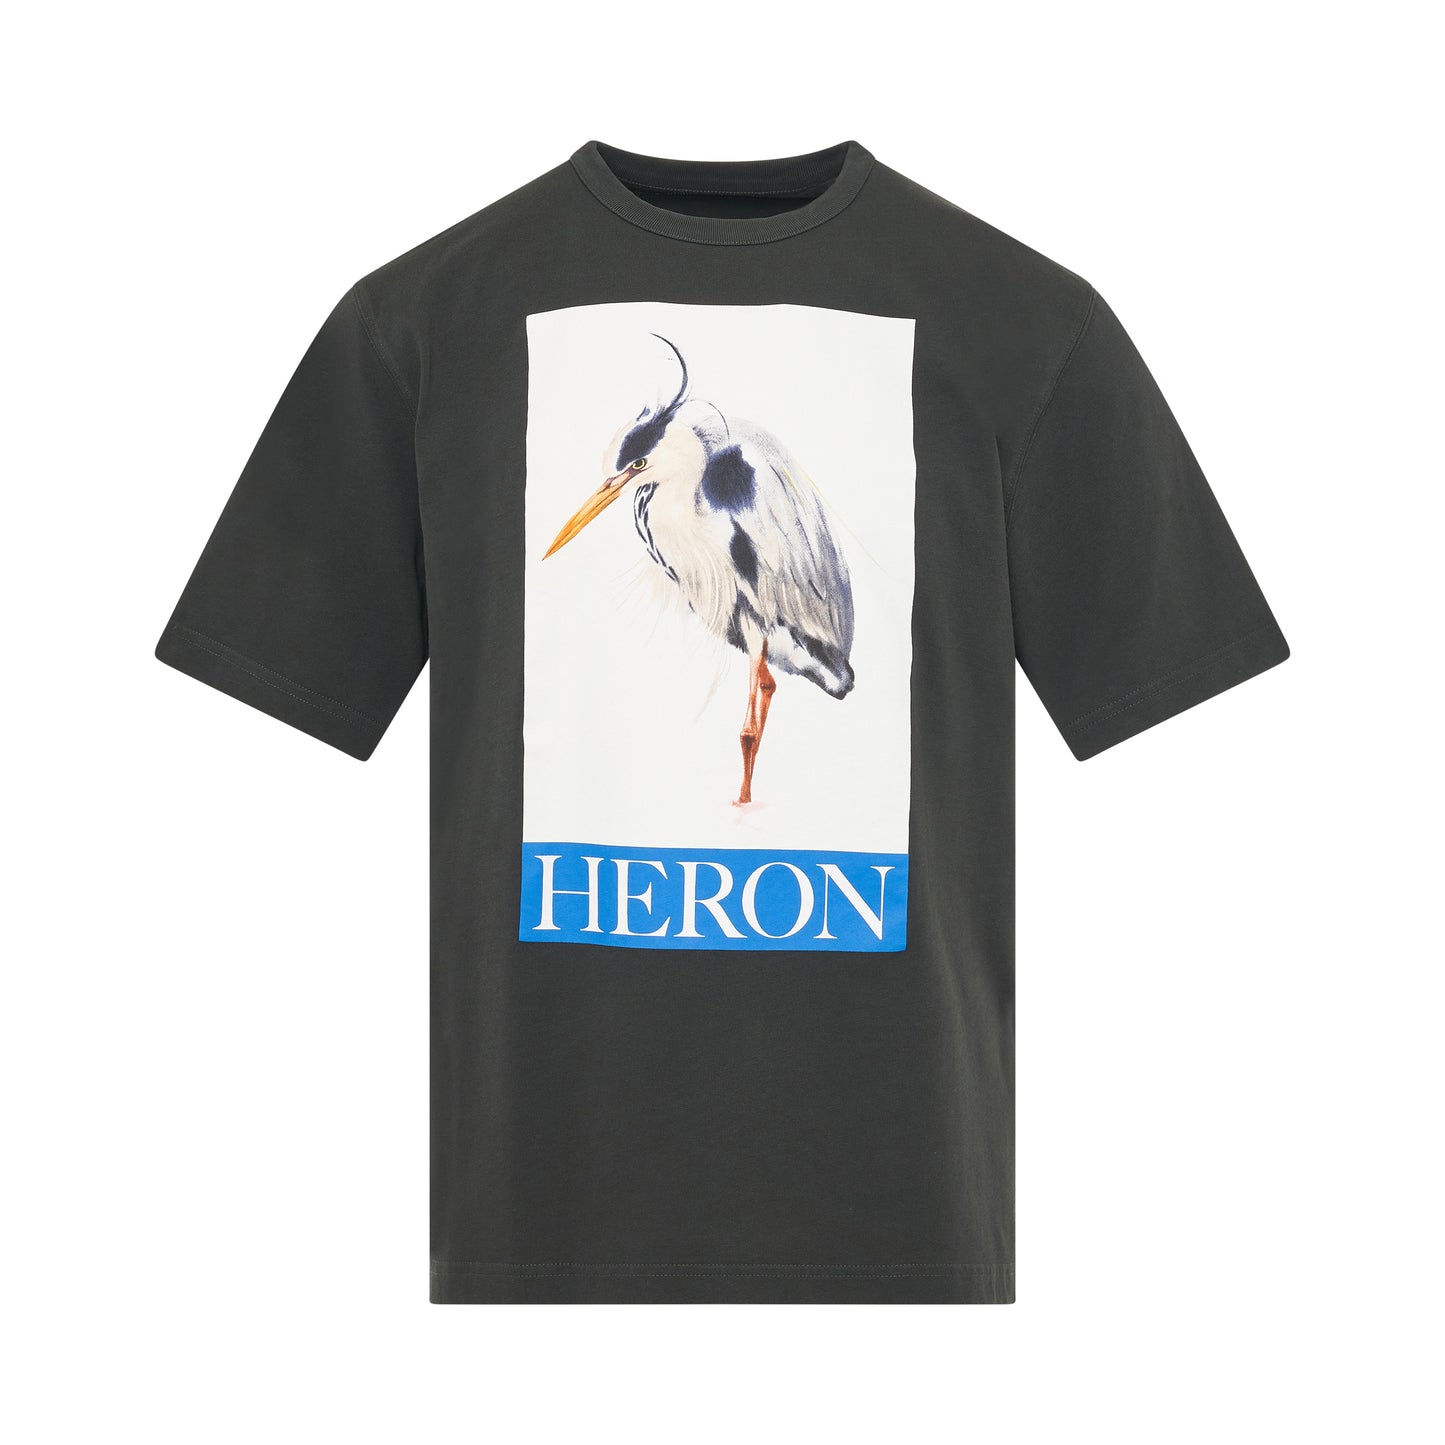 Heron Bird Painted Short Sleeve T-Shirt in Black/Blue